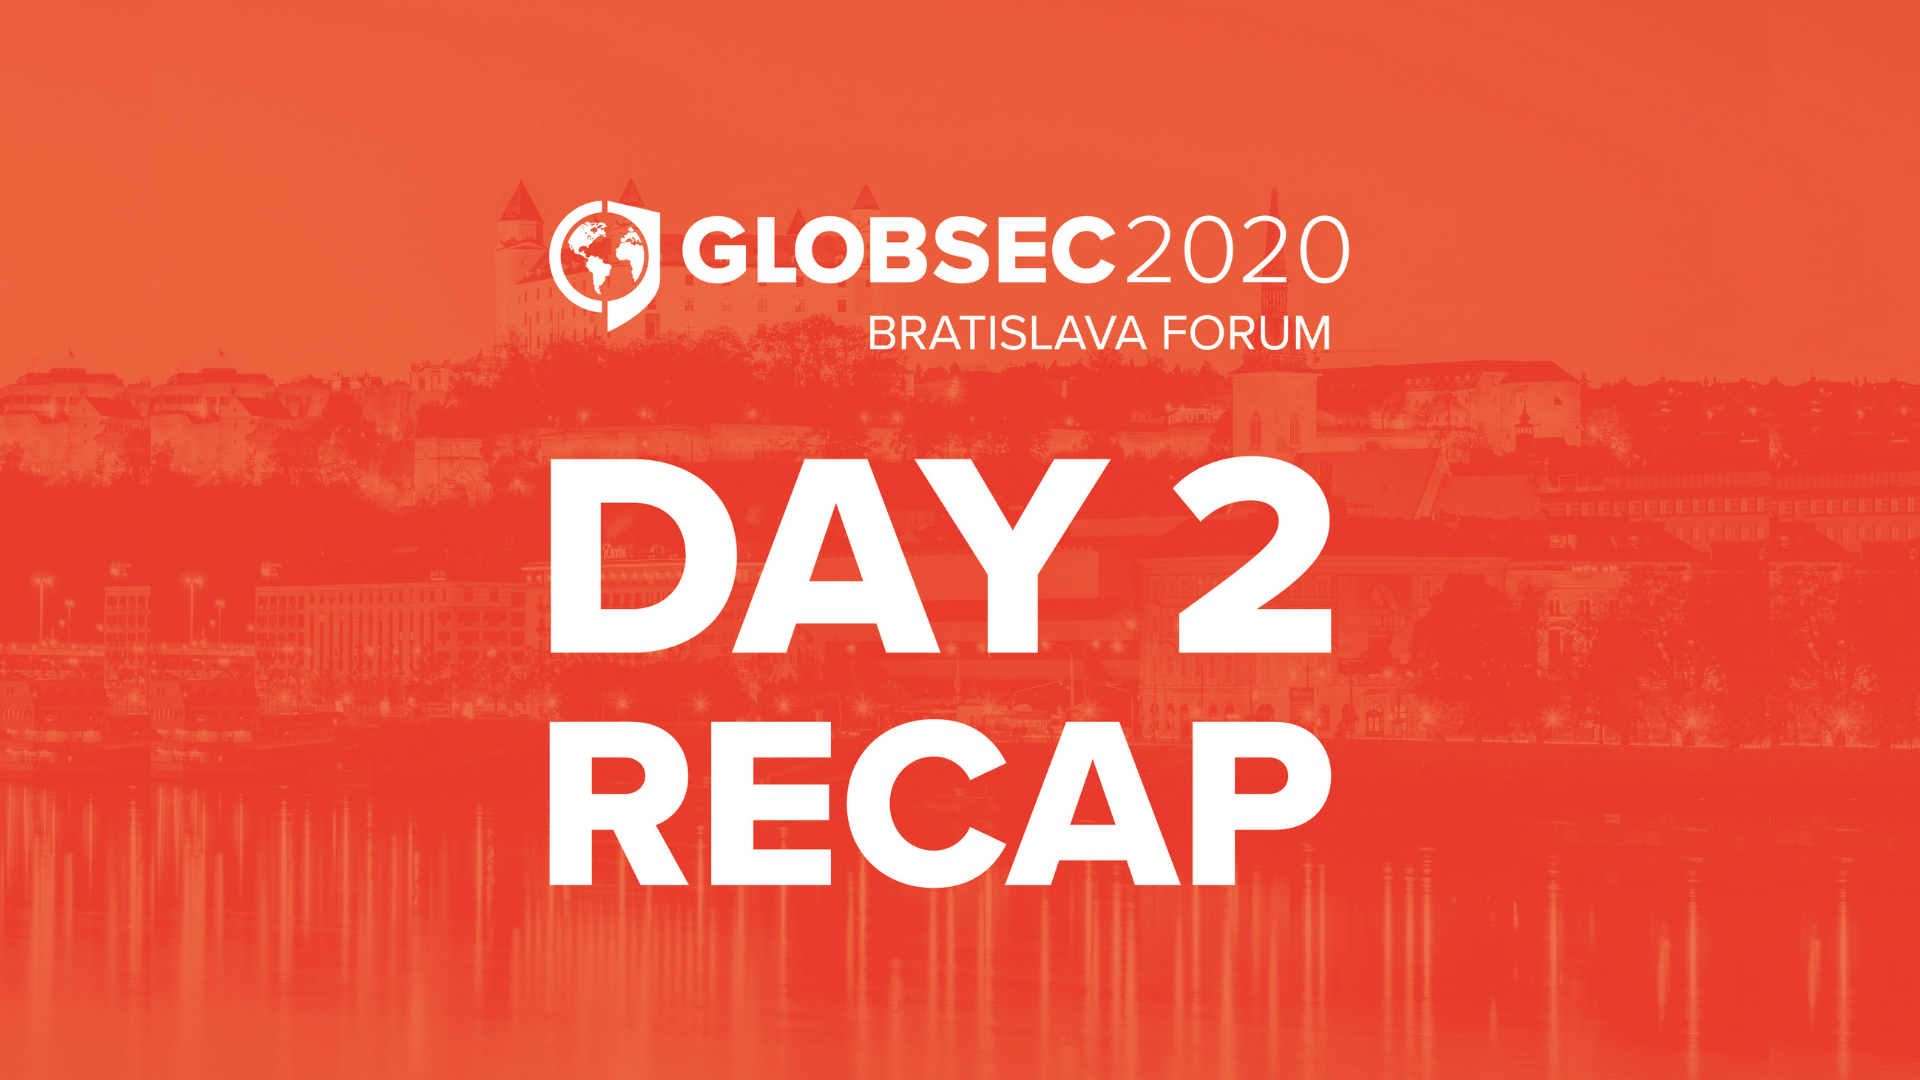 GLOBSEC 2020 Bratislava Forum: Day 2 Recap